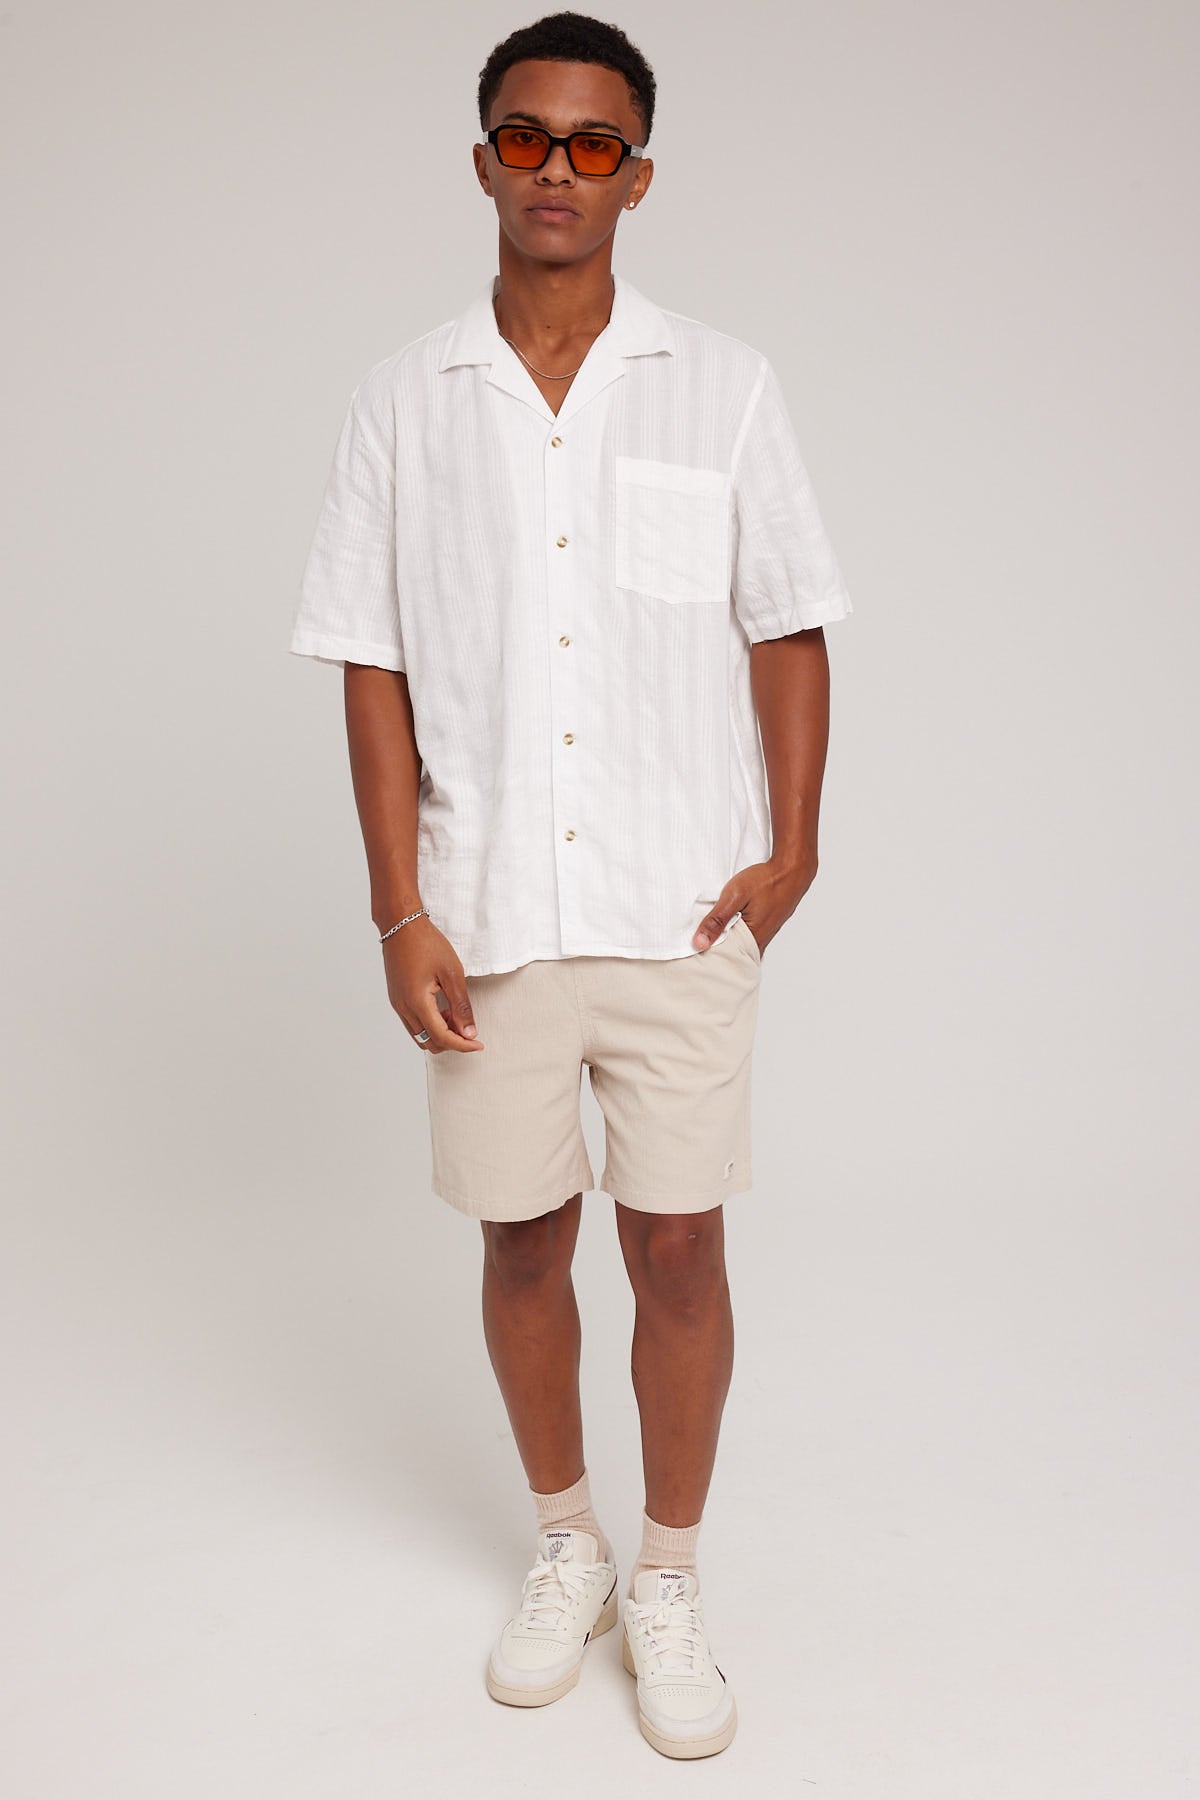 Barney Cools Resort Seersucker Shirt White